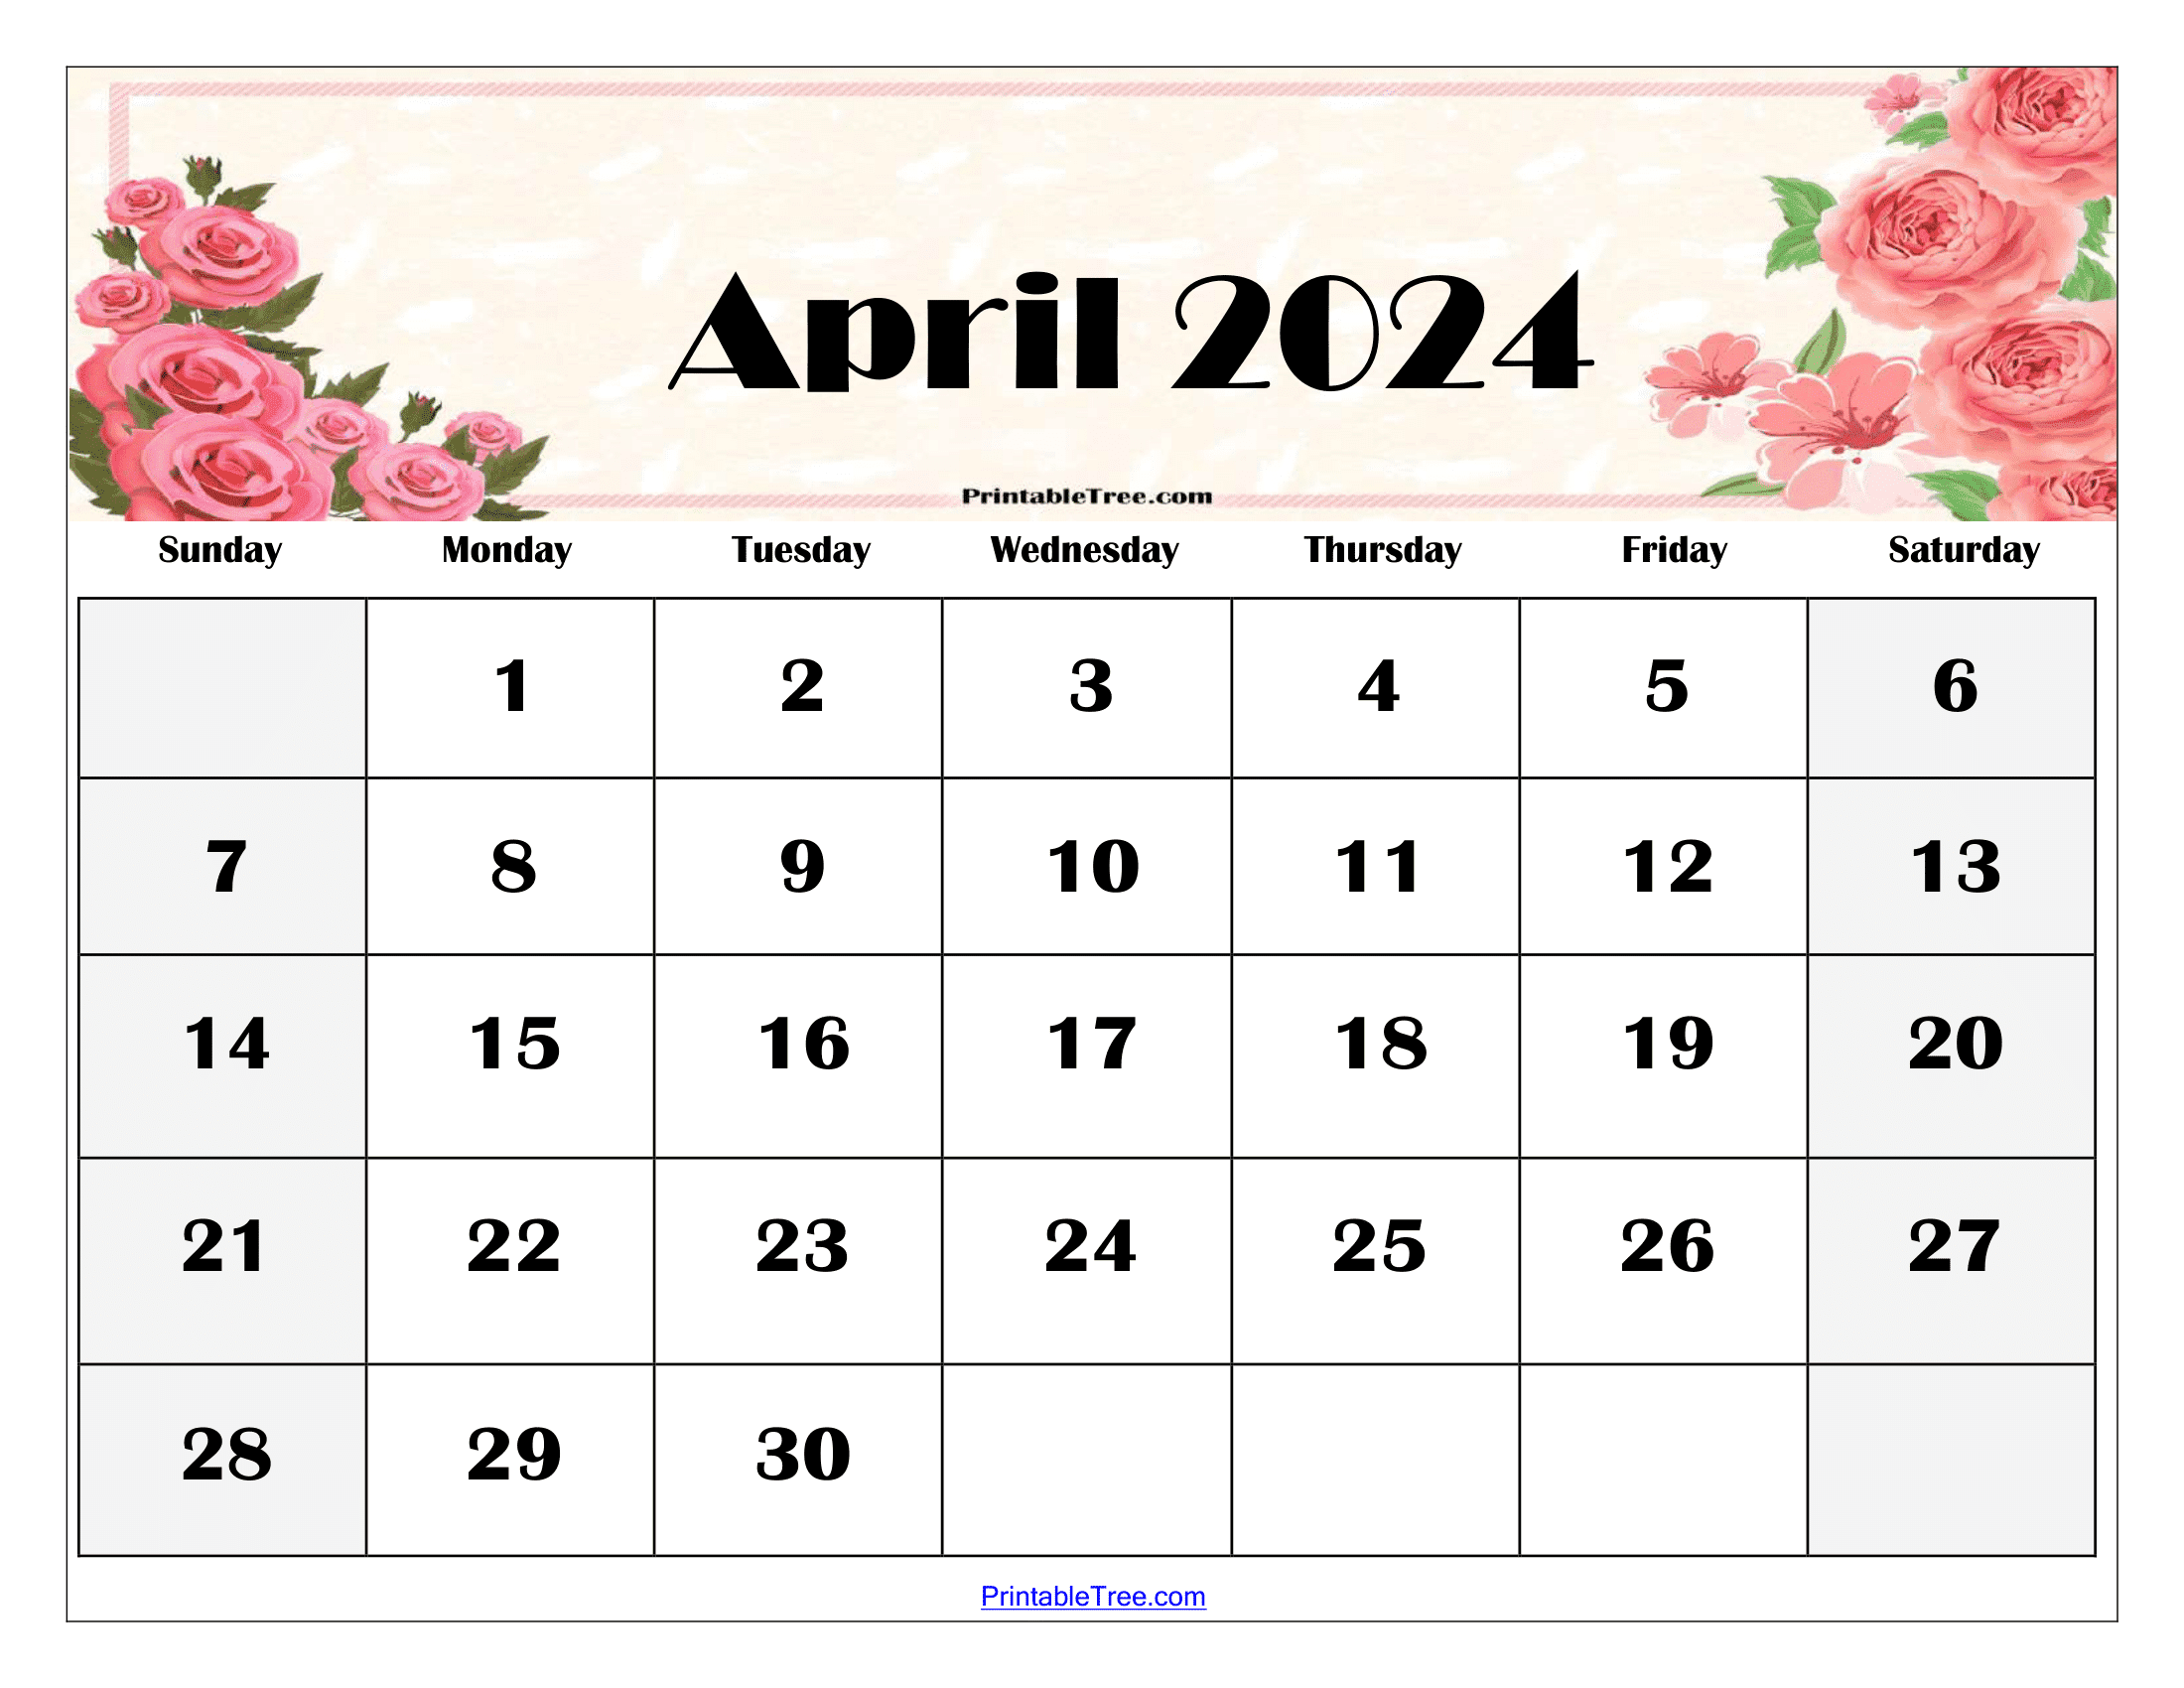 April 2024 Calendar Printable April Blank Calendar 2024 Easy To Use - Free Printable Calendar April 2024 Pdf